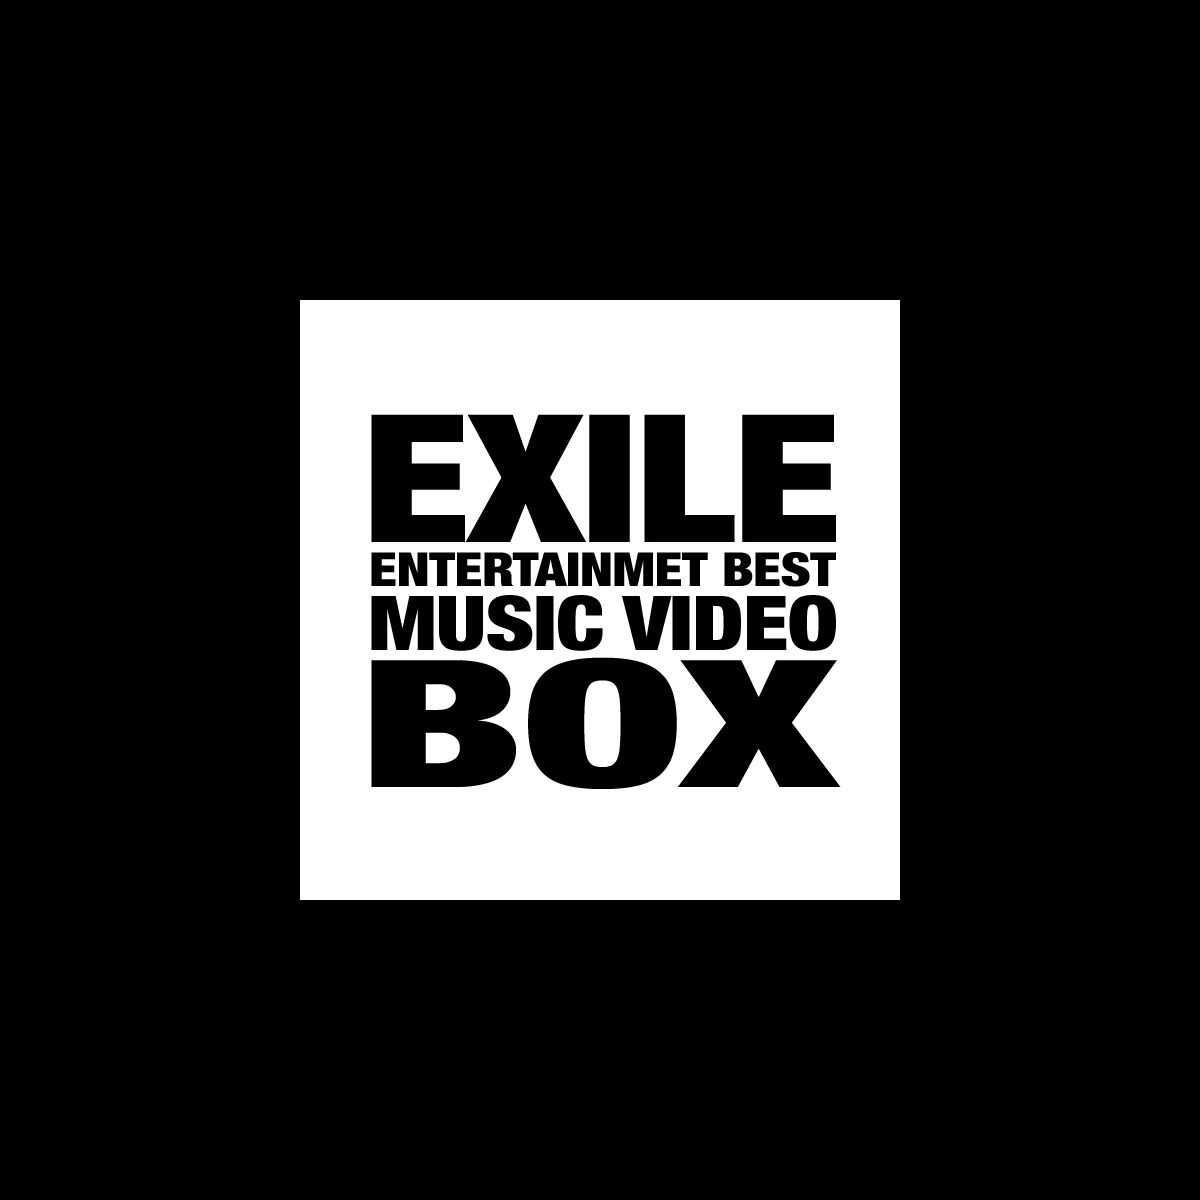 海外輸入】 EXILE MUSIC VIDEO BEST ecousarecycling.com